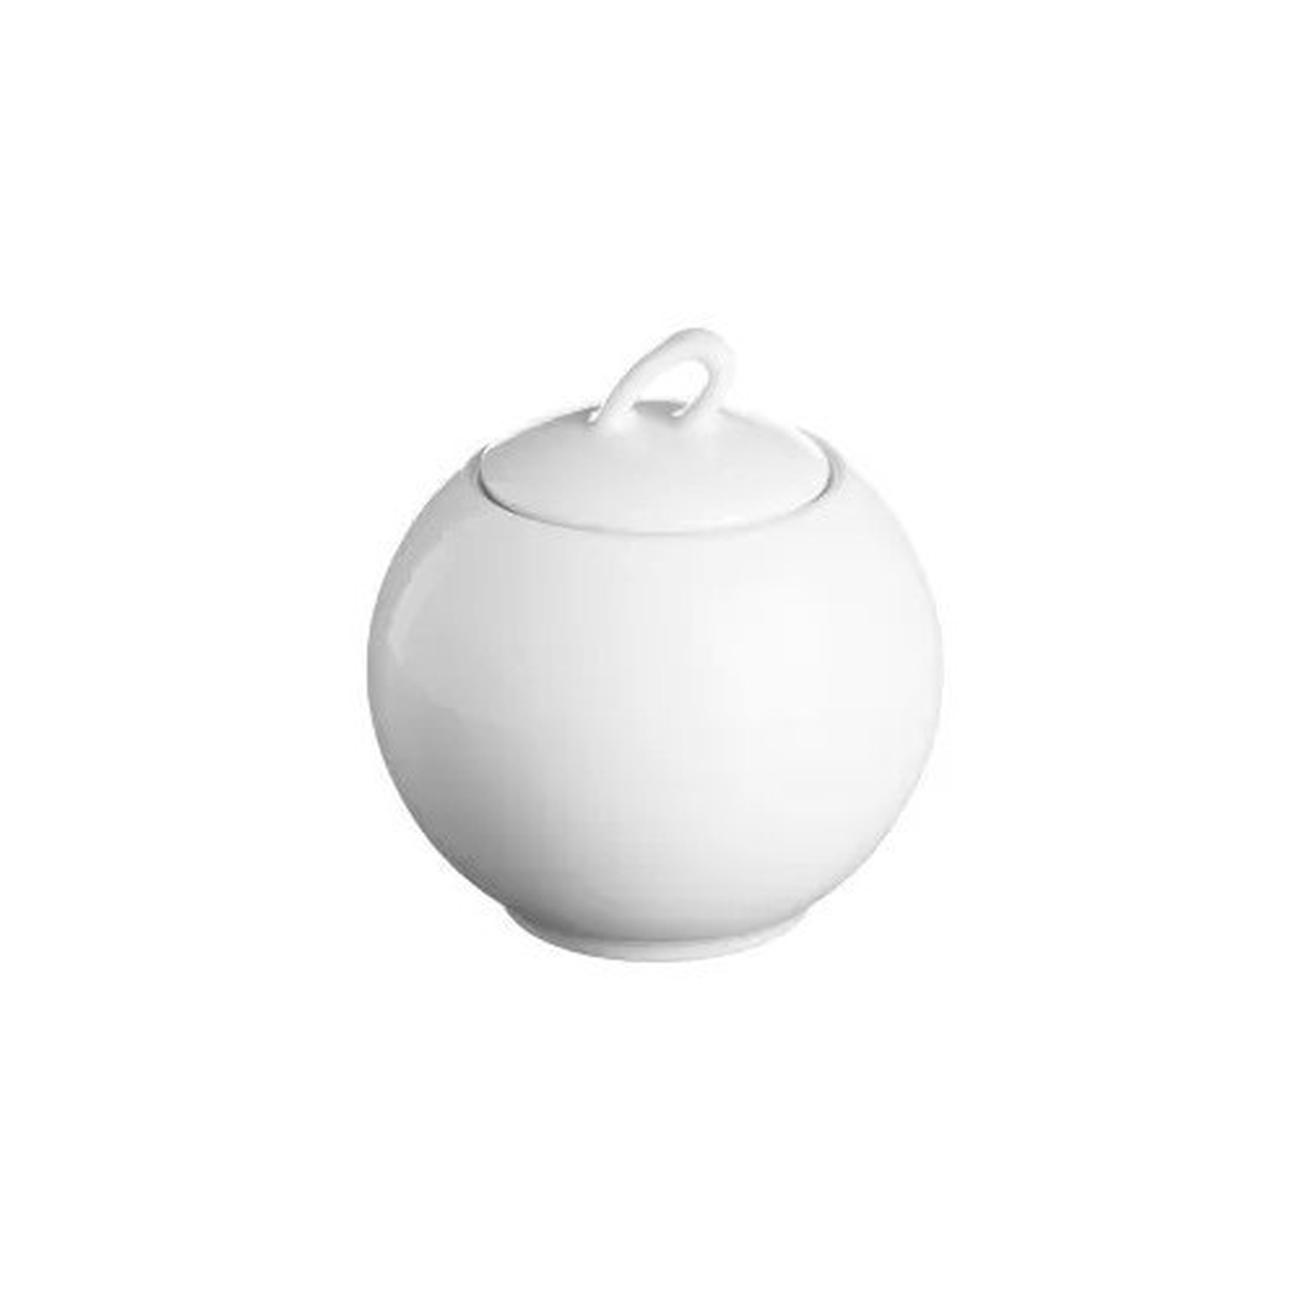 price-&-kensington-simplicity-sugar-bowl-with-lid - Price & Kensington Simplicity White Sugar Bowl With Lid